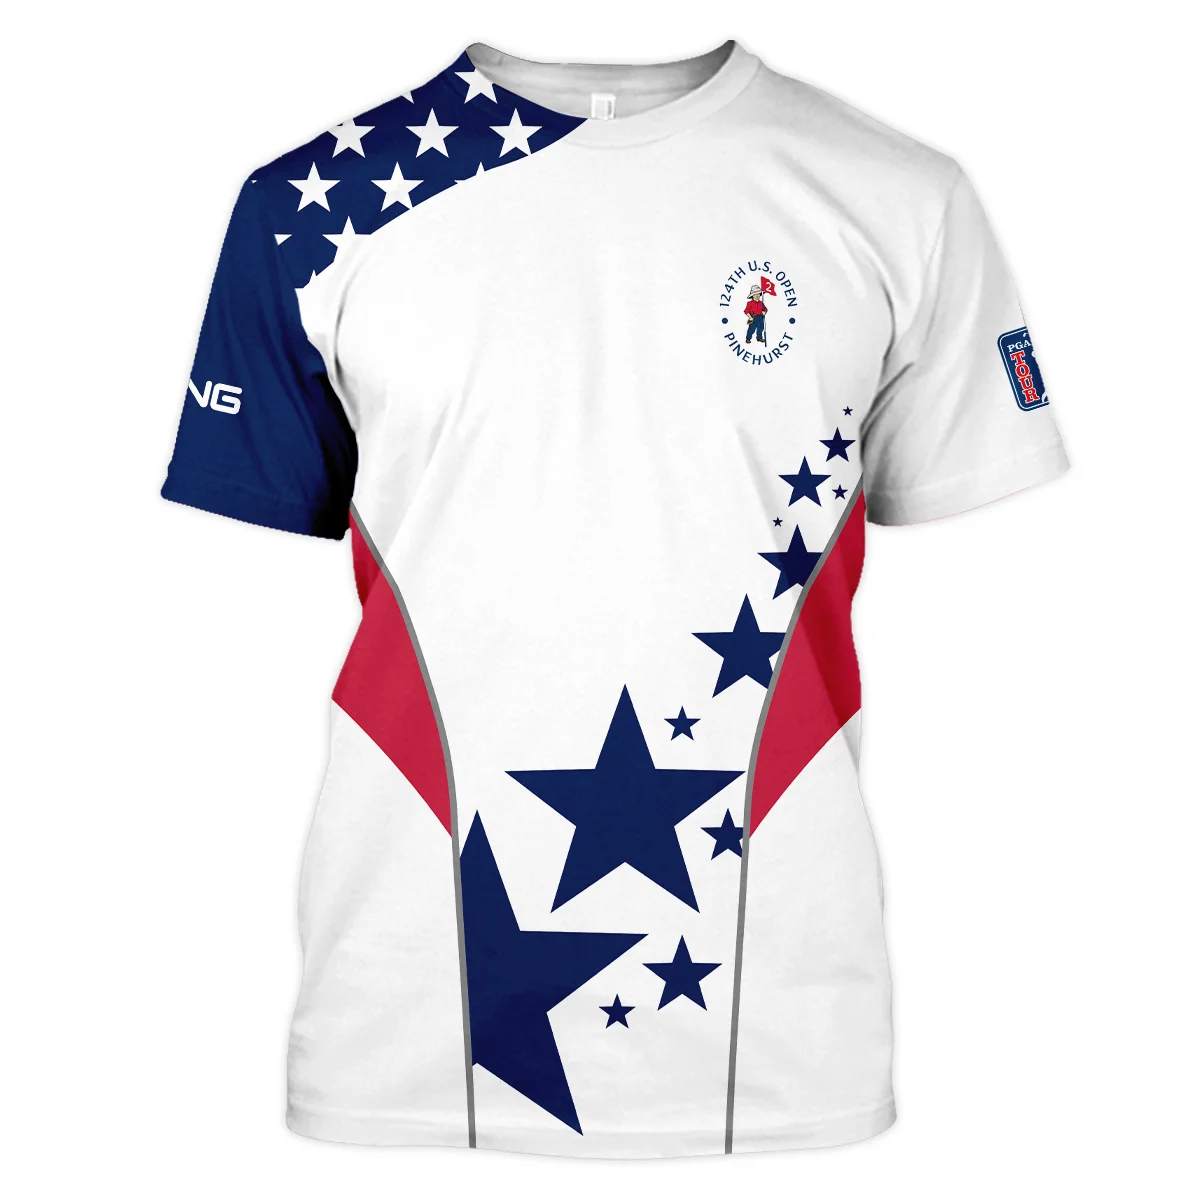 124th U.S. Open Pinehurst Ping Stars US Flag White Blue Style Classic, Short Sleeve Polo Shirts Quarter-Zip